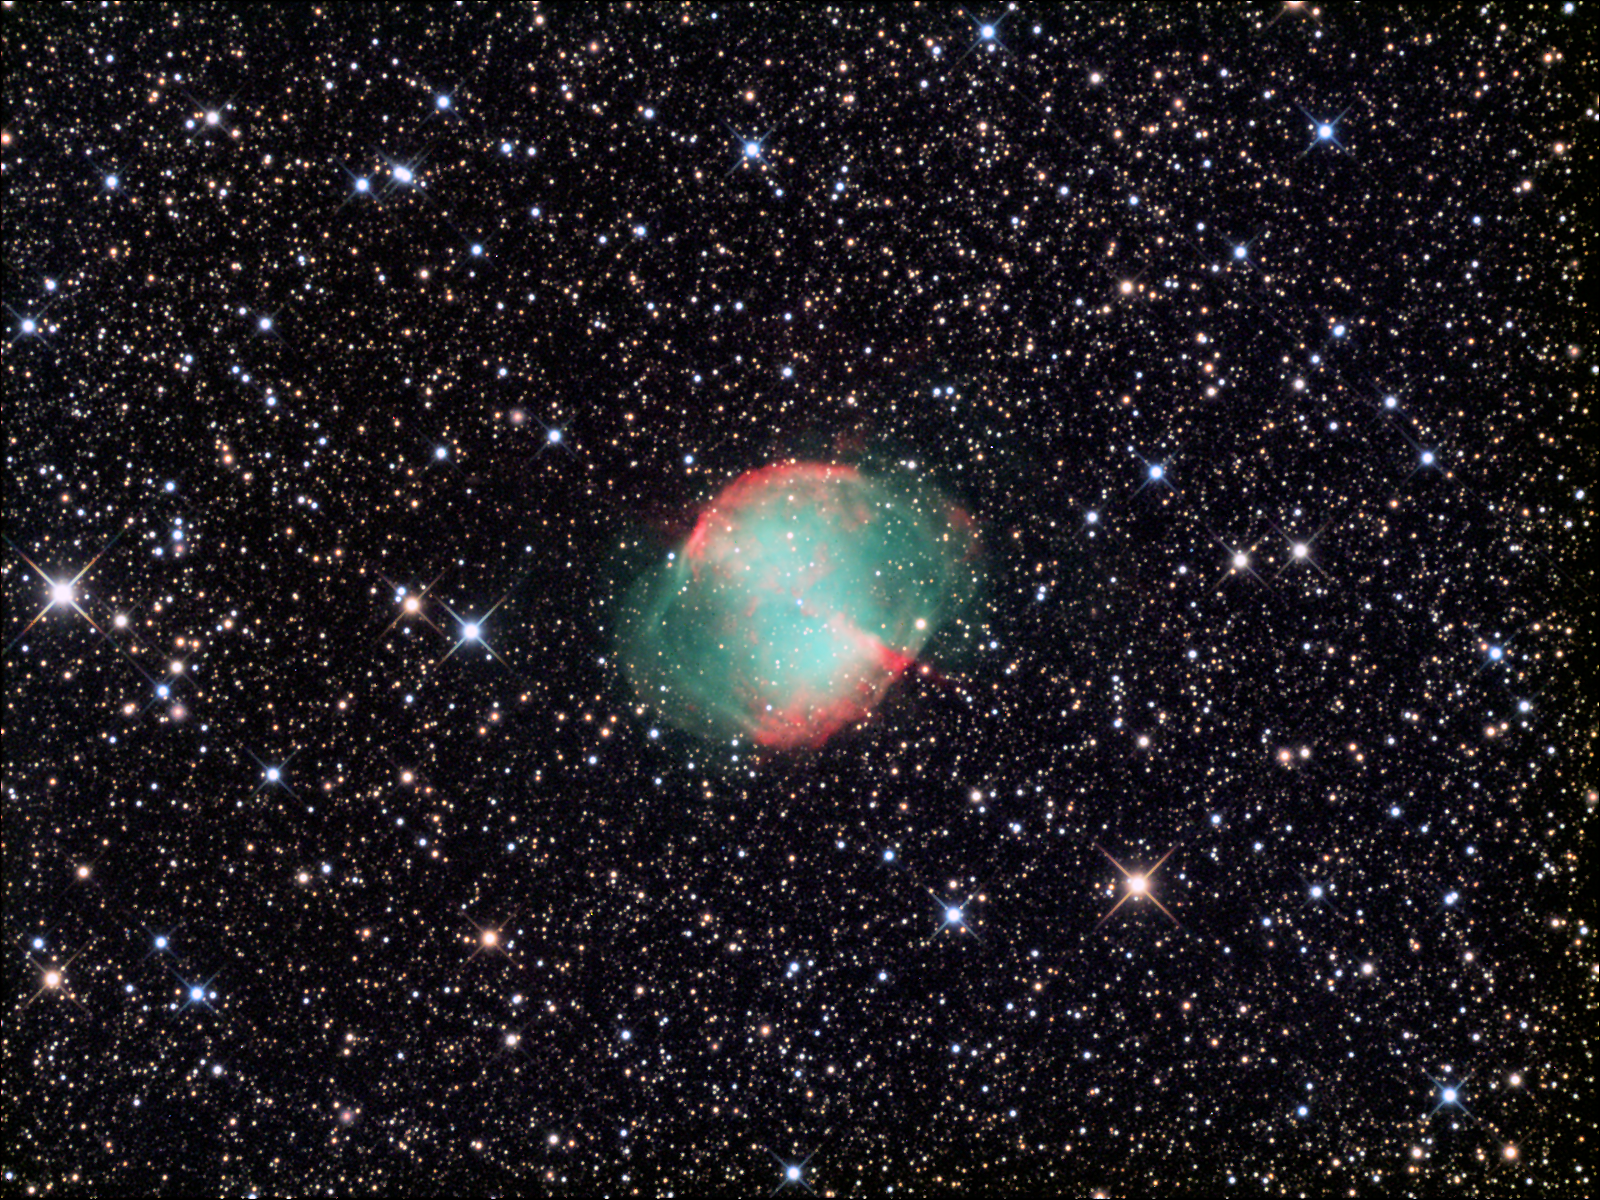 M27 - Dumbbell Nebula in Vulpecula